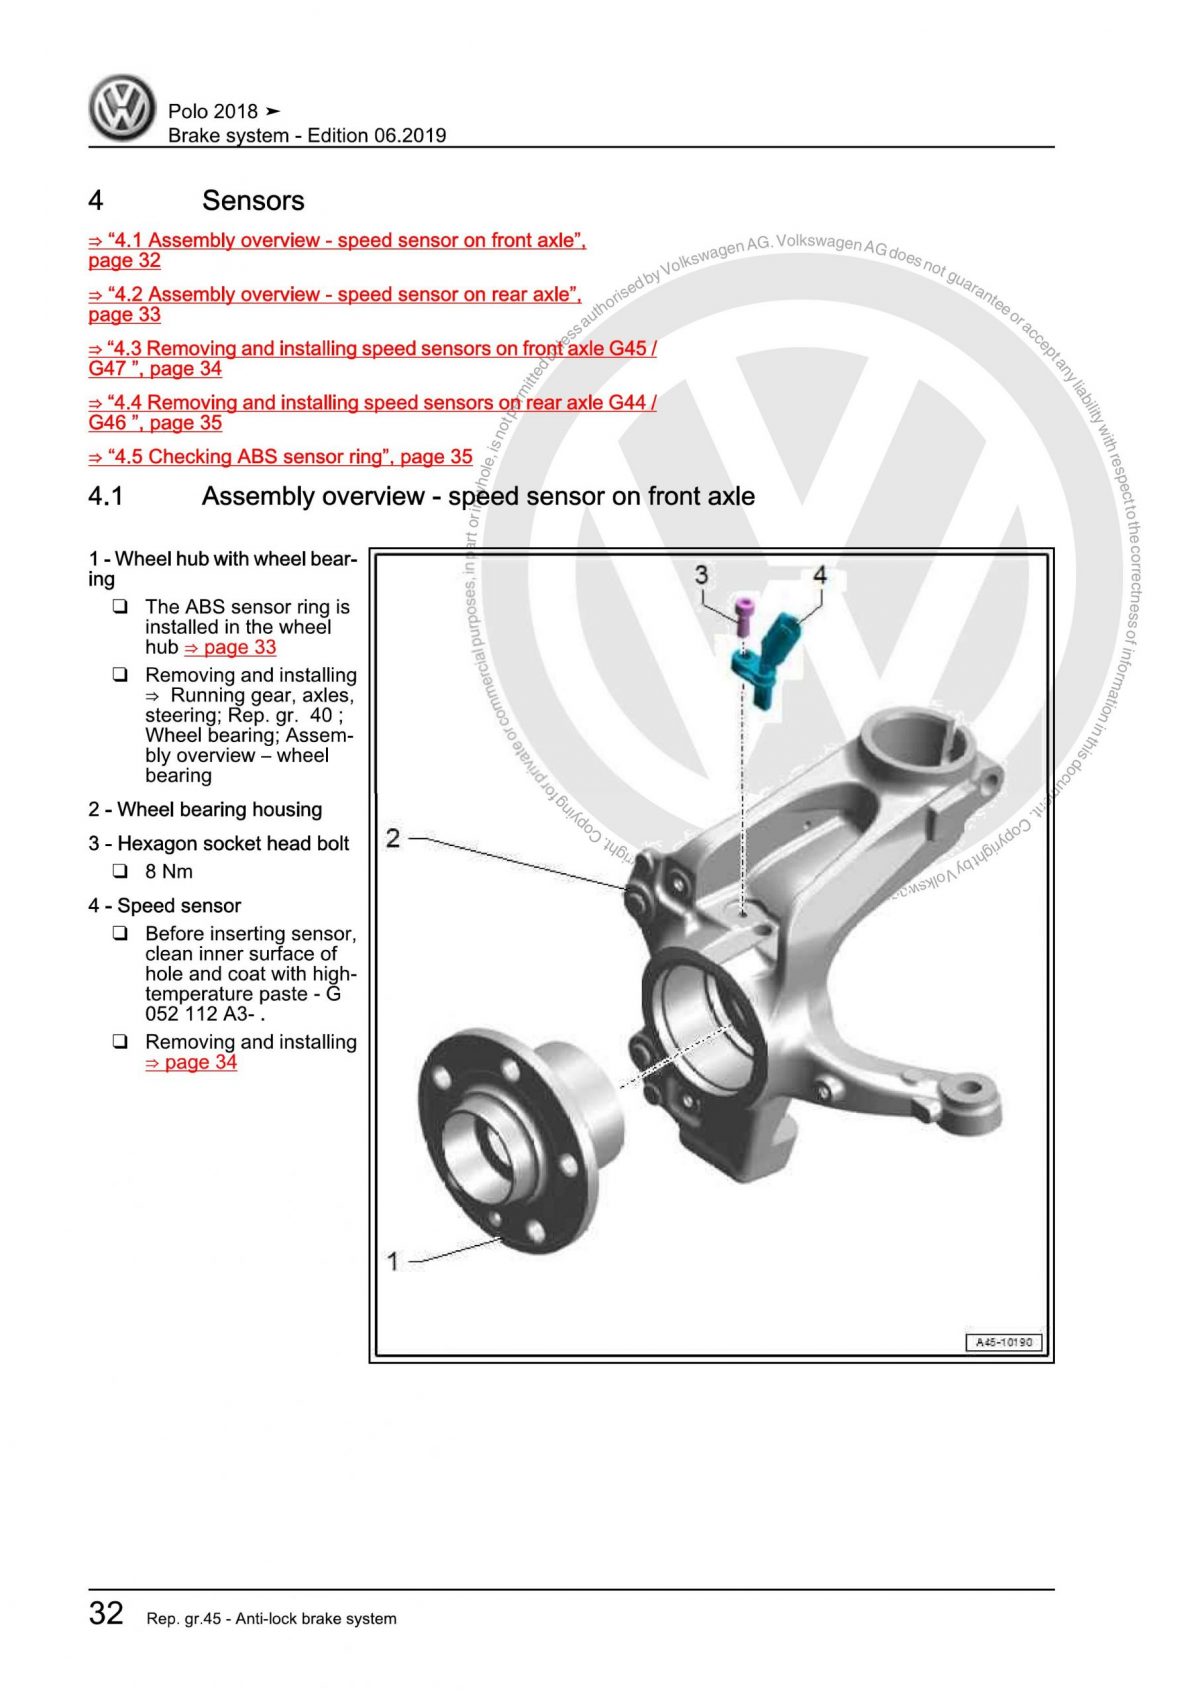 VW Polo Brake System OEM Workshop Manual